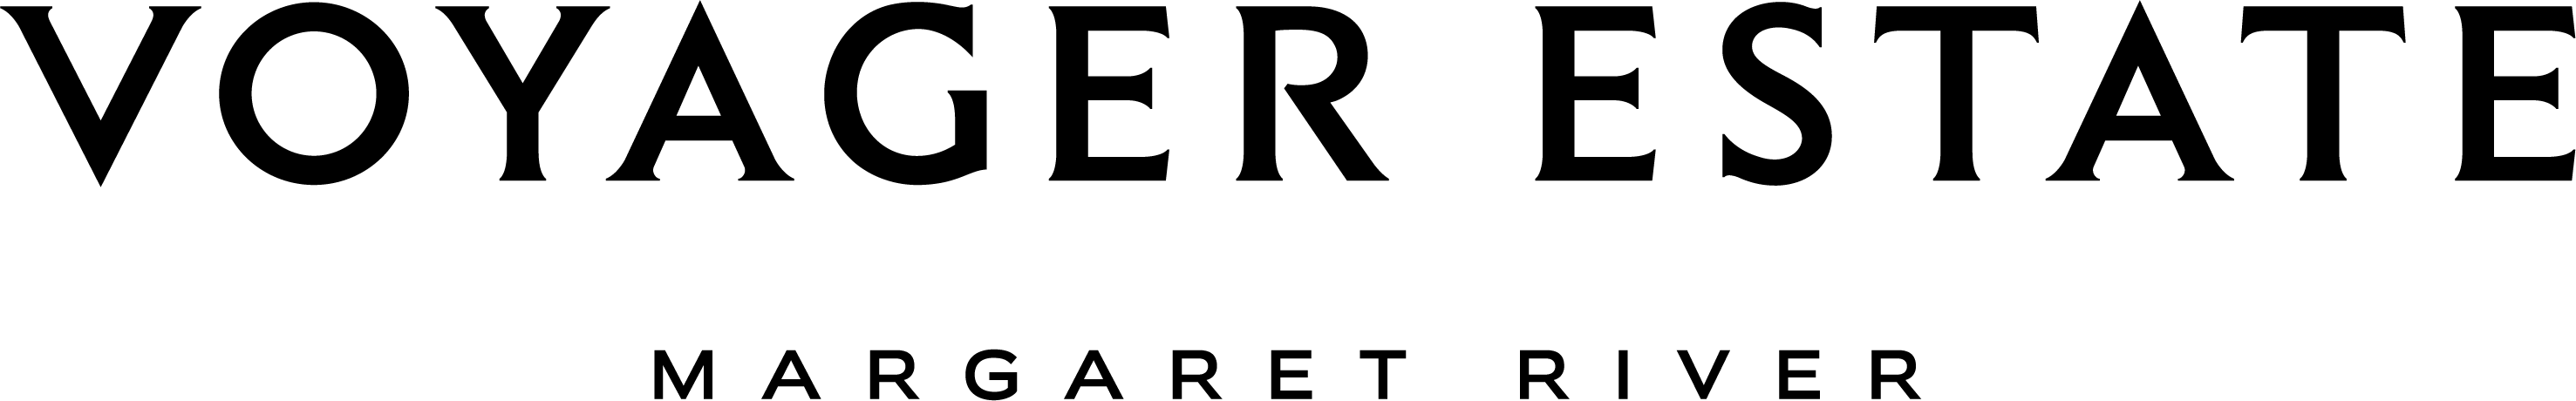 Voyager_Estate_Logo_2019_Black